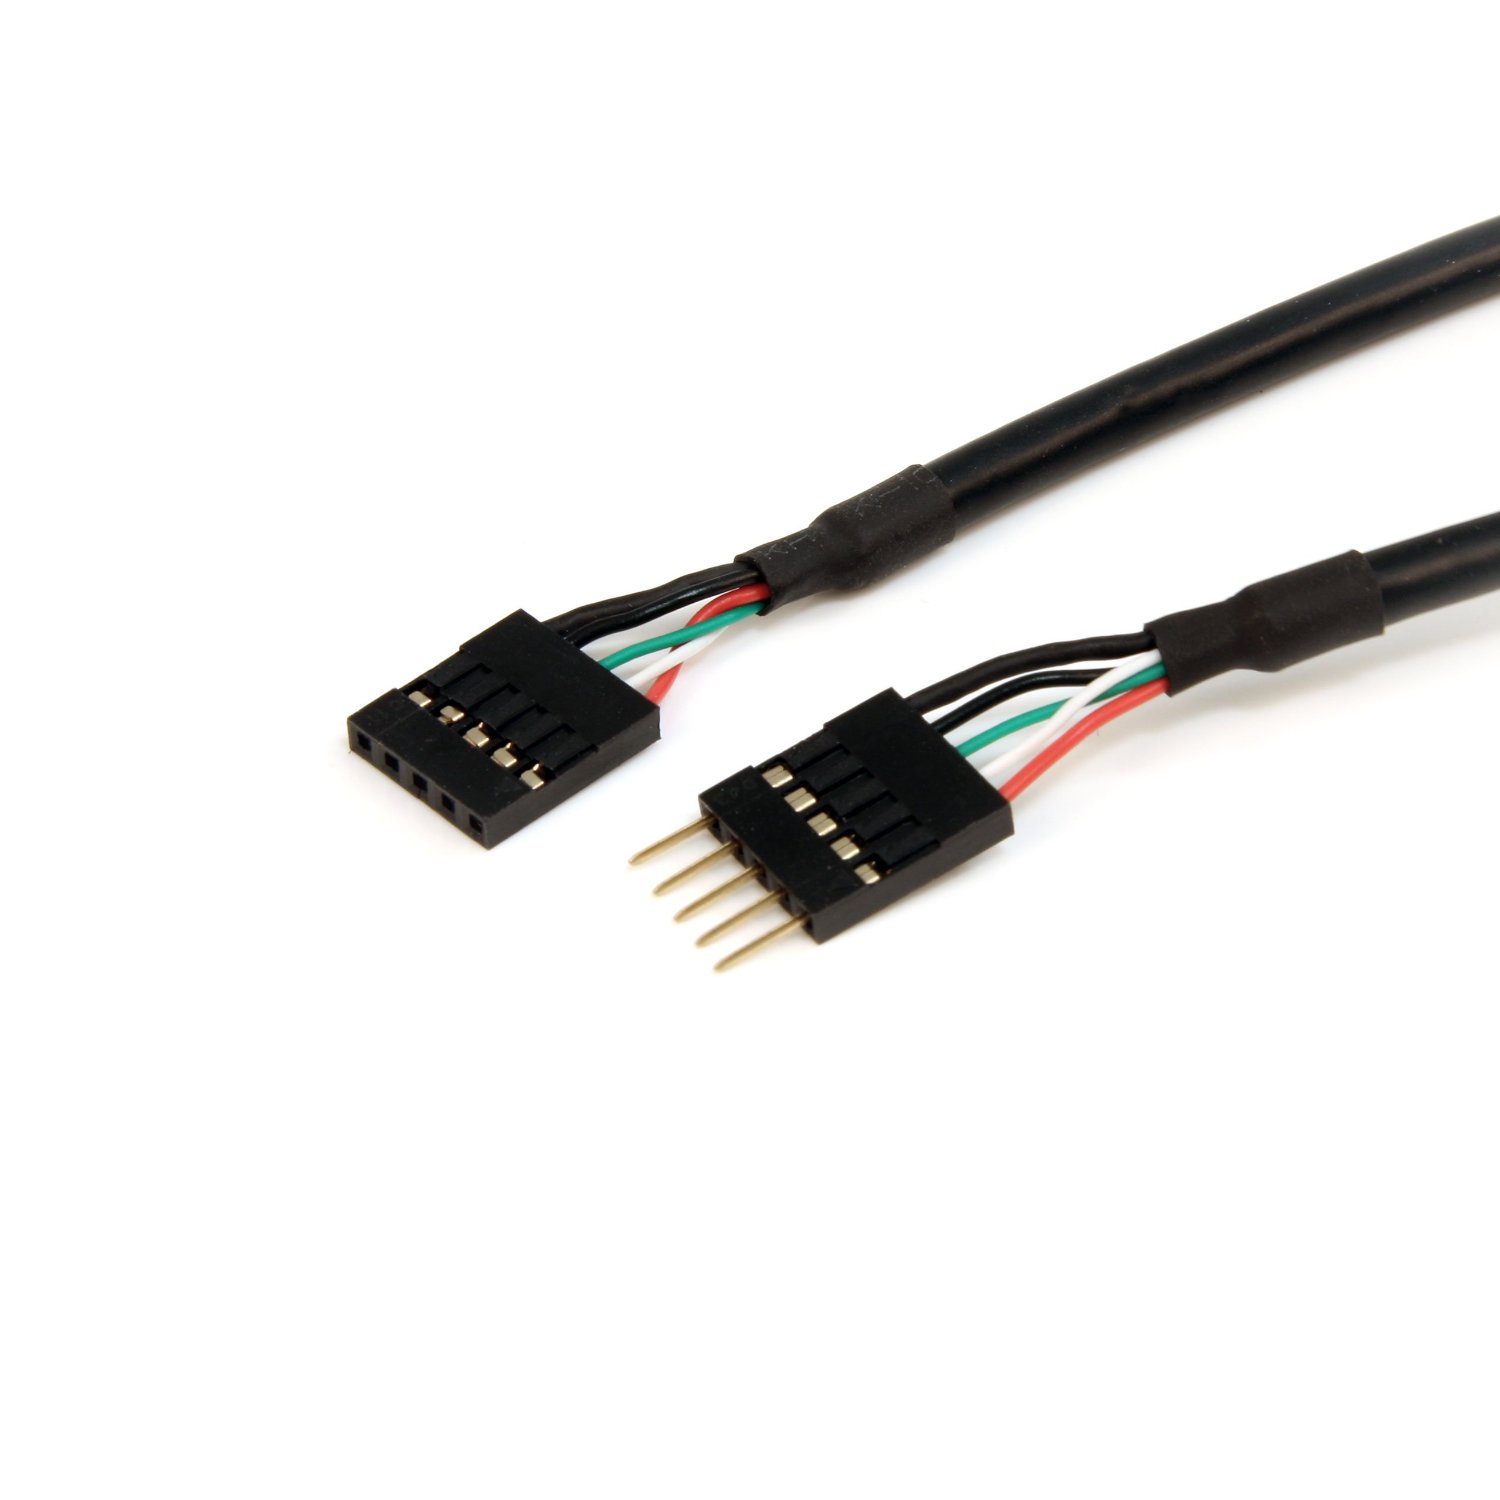 Cable USB Interne 5 pins M/F - USBINT5PINMF - Connectique PC - 0